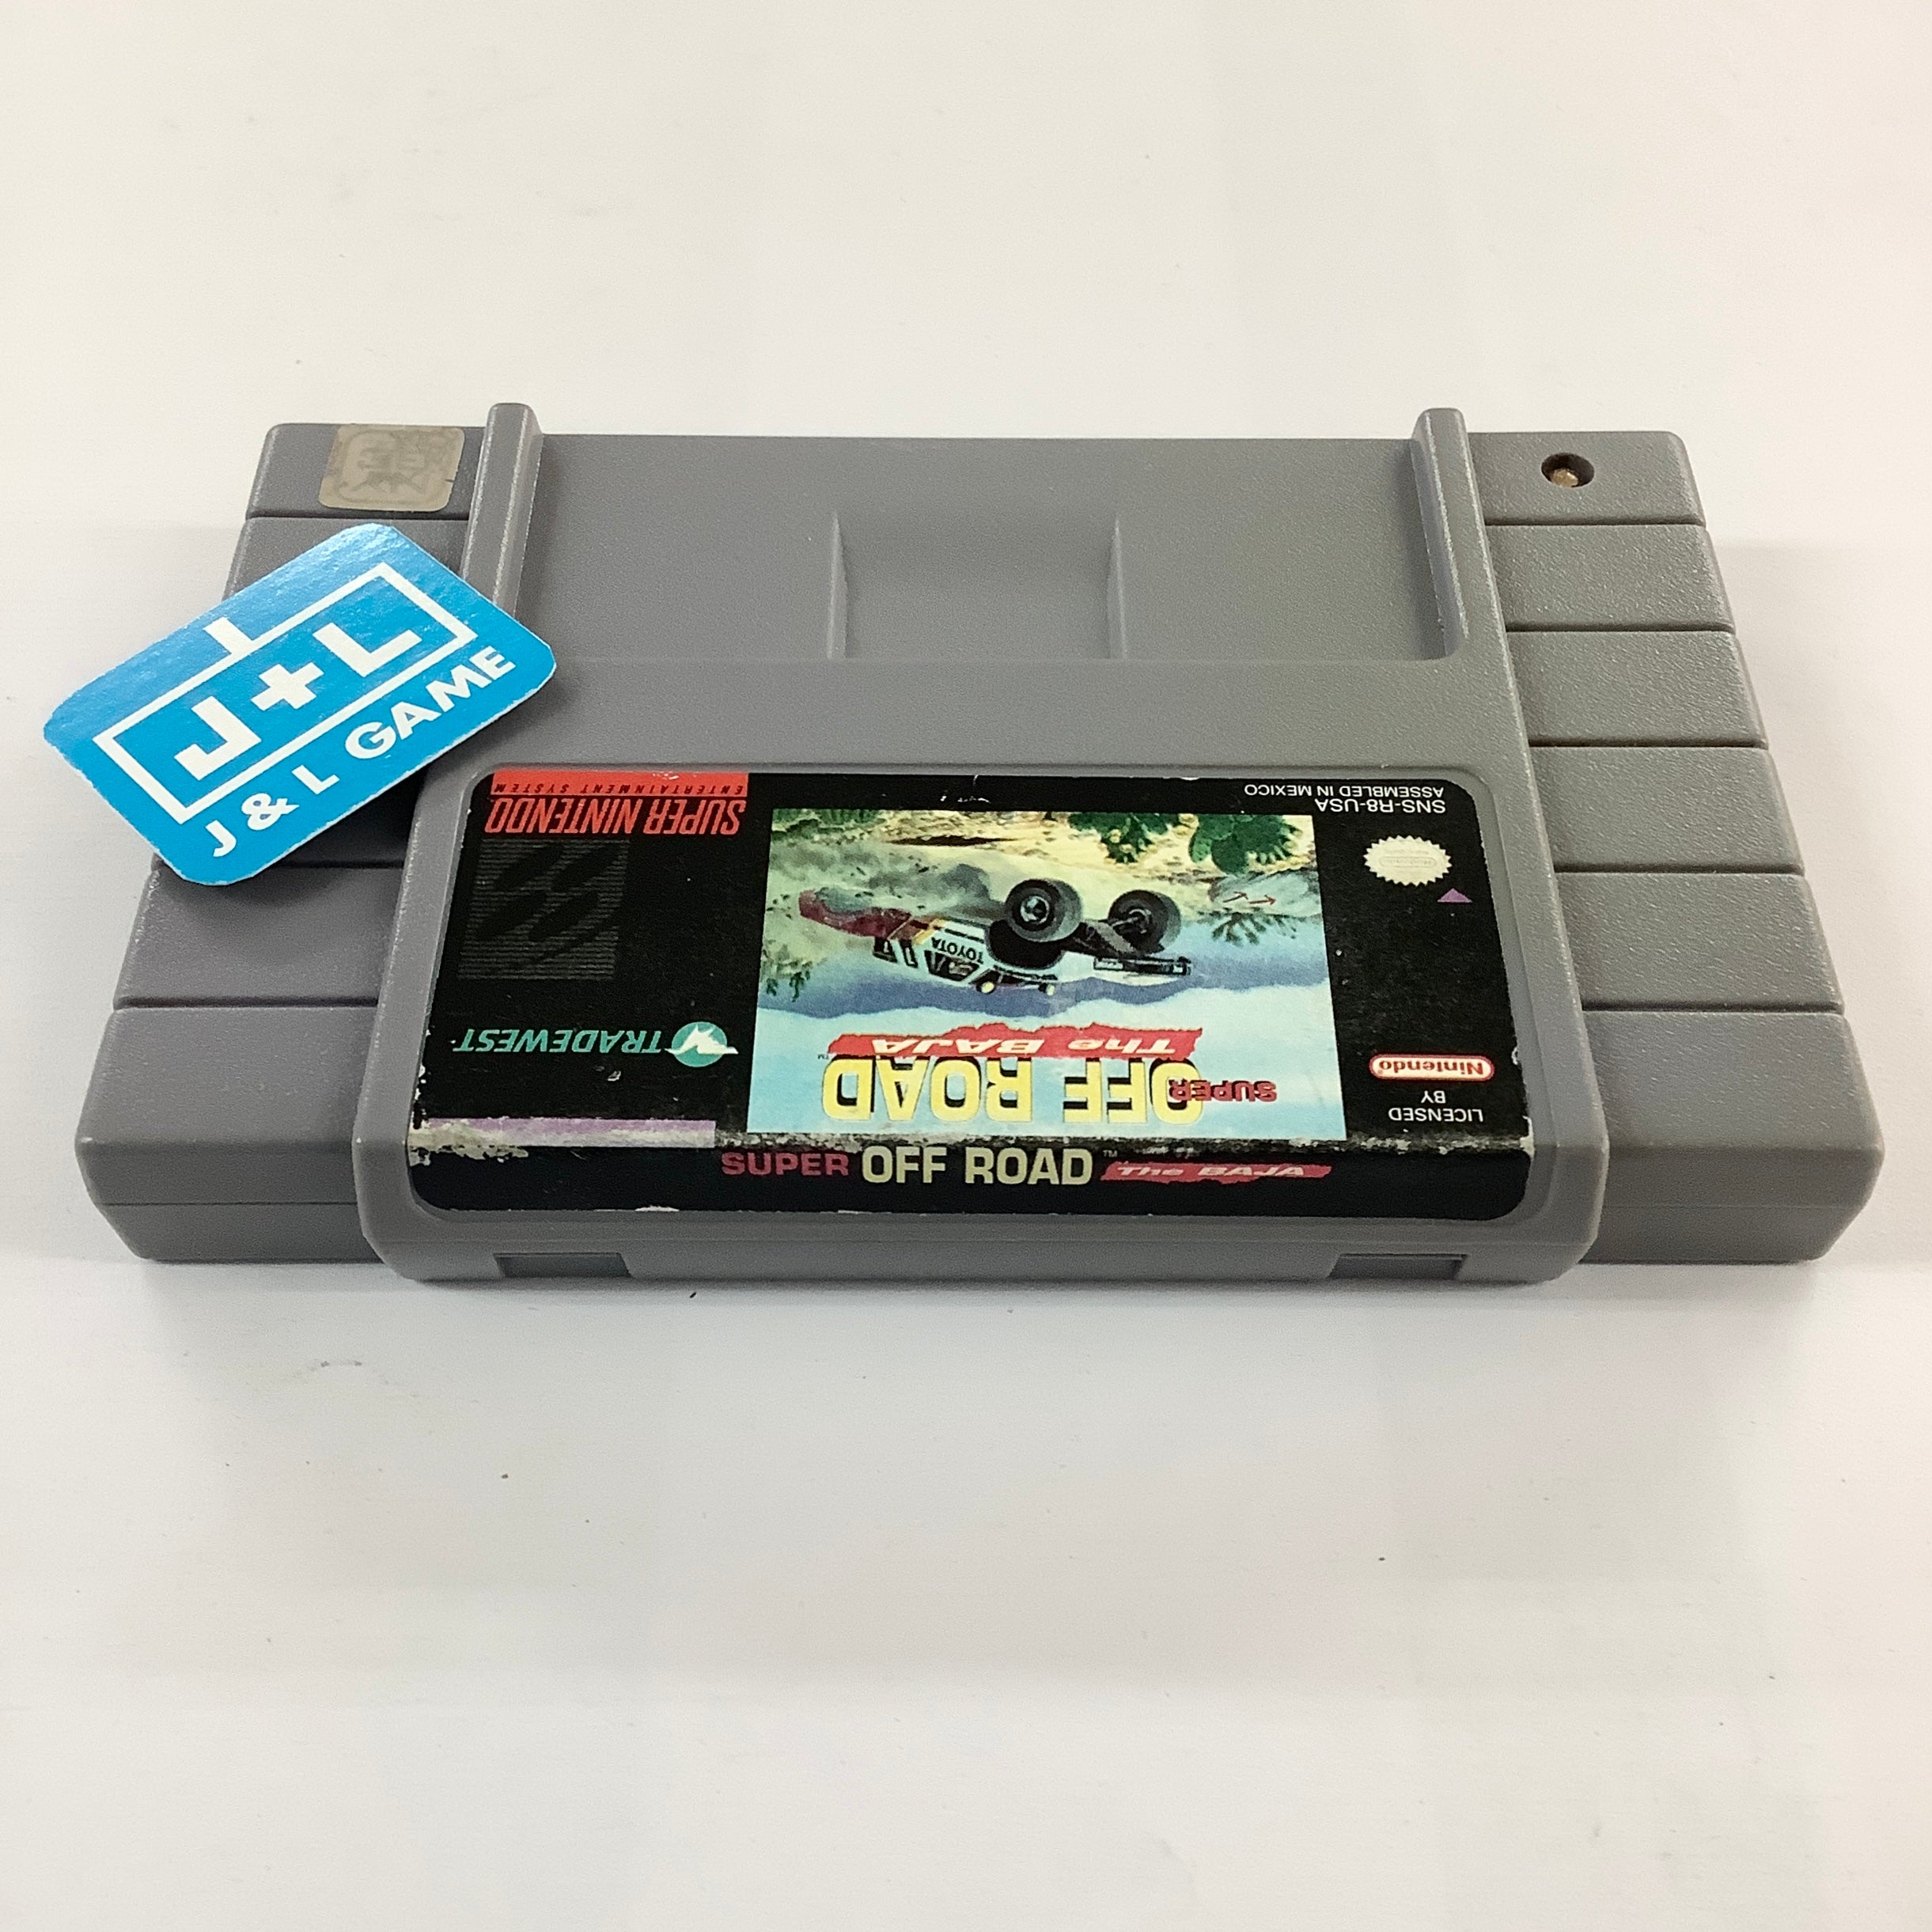 Super Off Road: The Baja - (SNES) Super Nintendo [Pre-Owned] Video Games Tradewest   